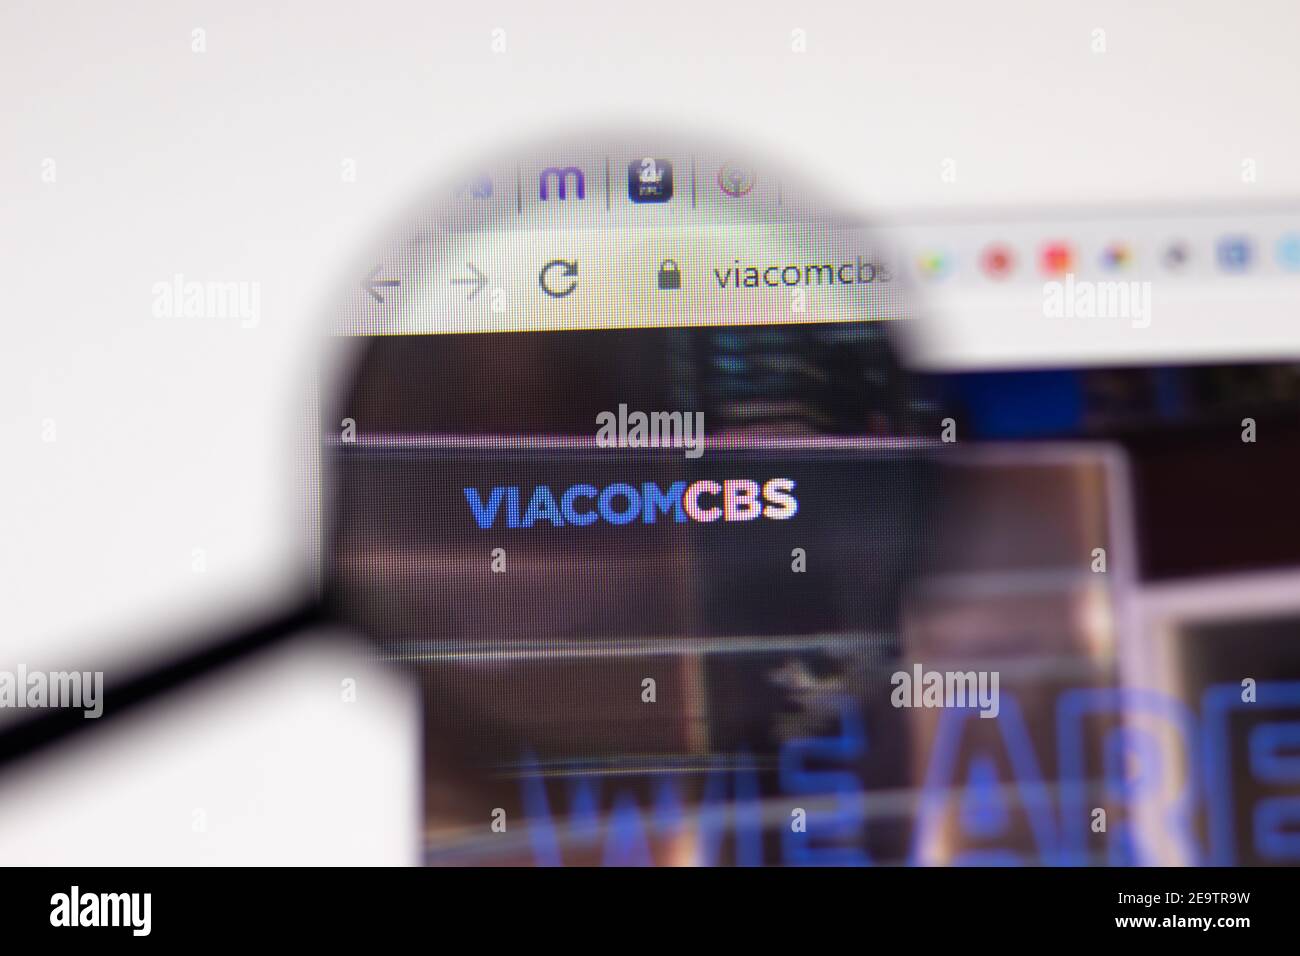 Los Angeles, USA - 1. Februar 2021: Viacomcbs.com Webseite. ViacomCBS-Logo auf dem Display, illustrative Editorial Stockfoto